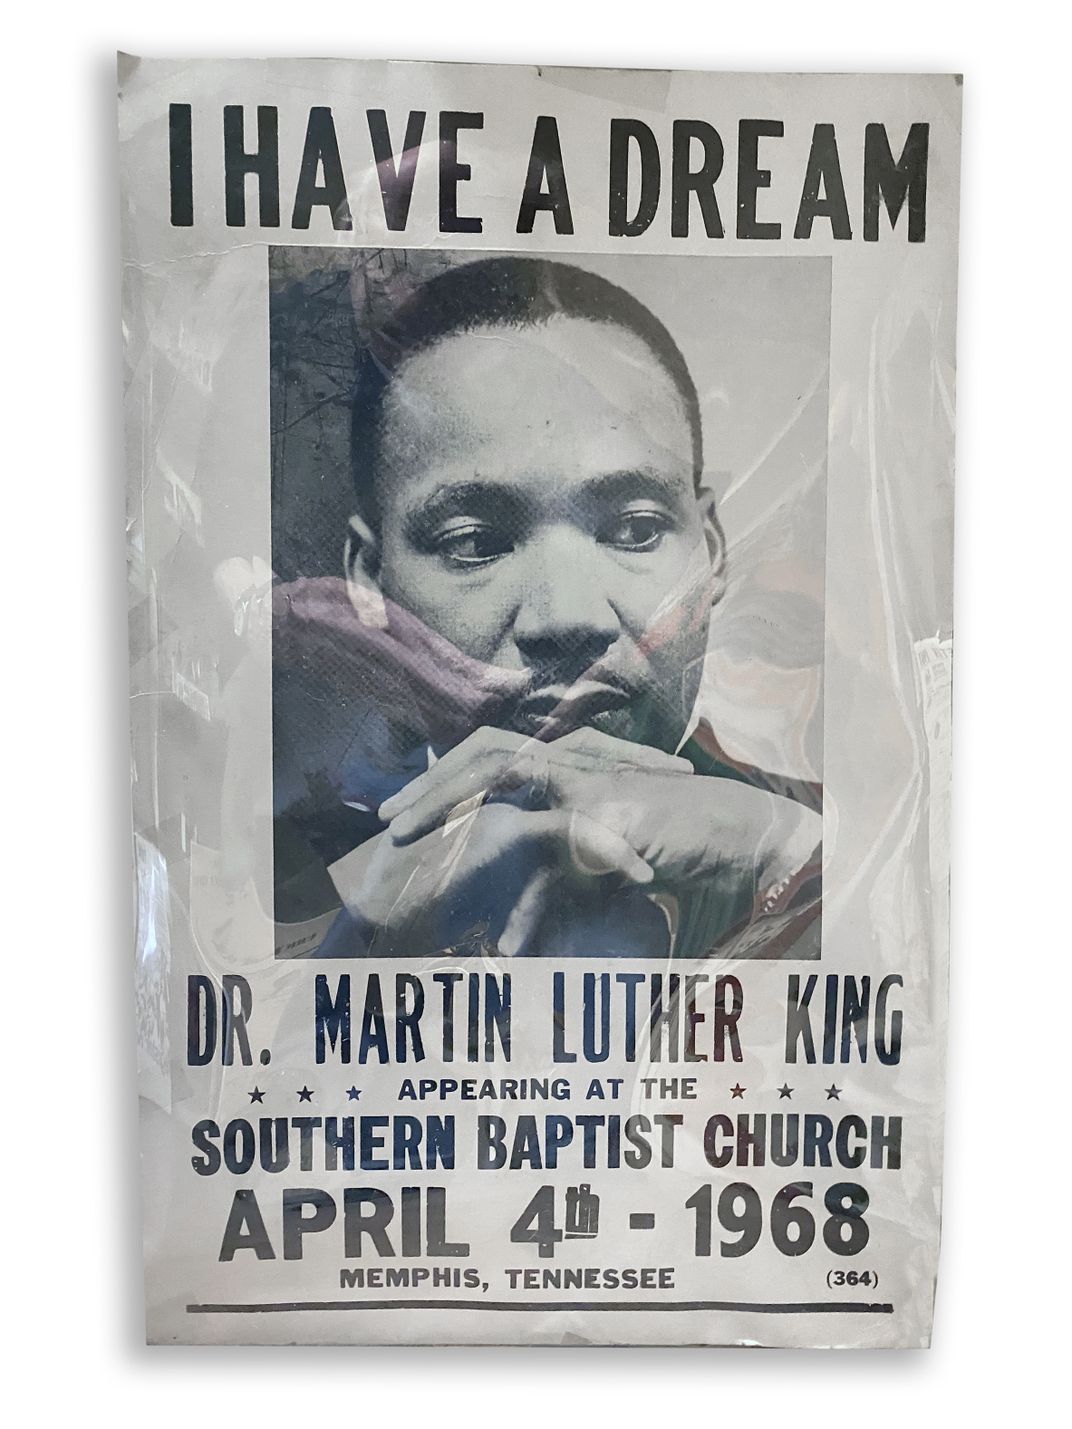 MLK poster